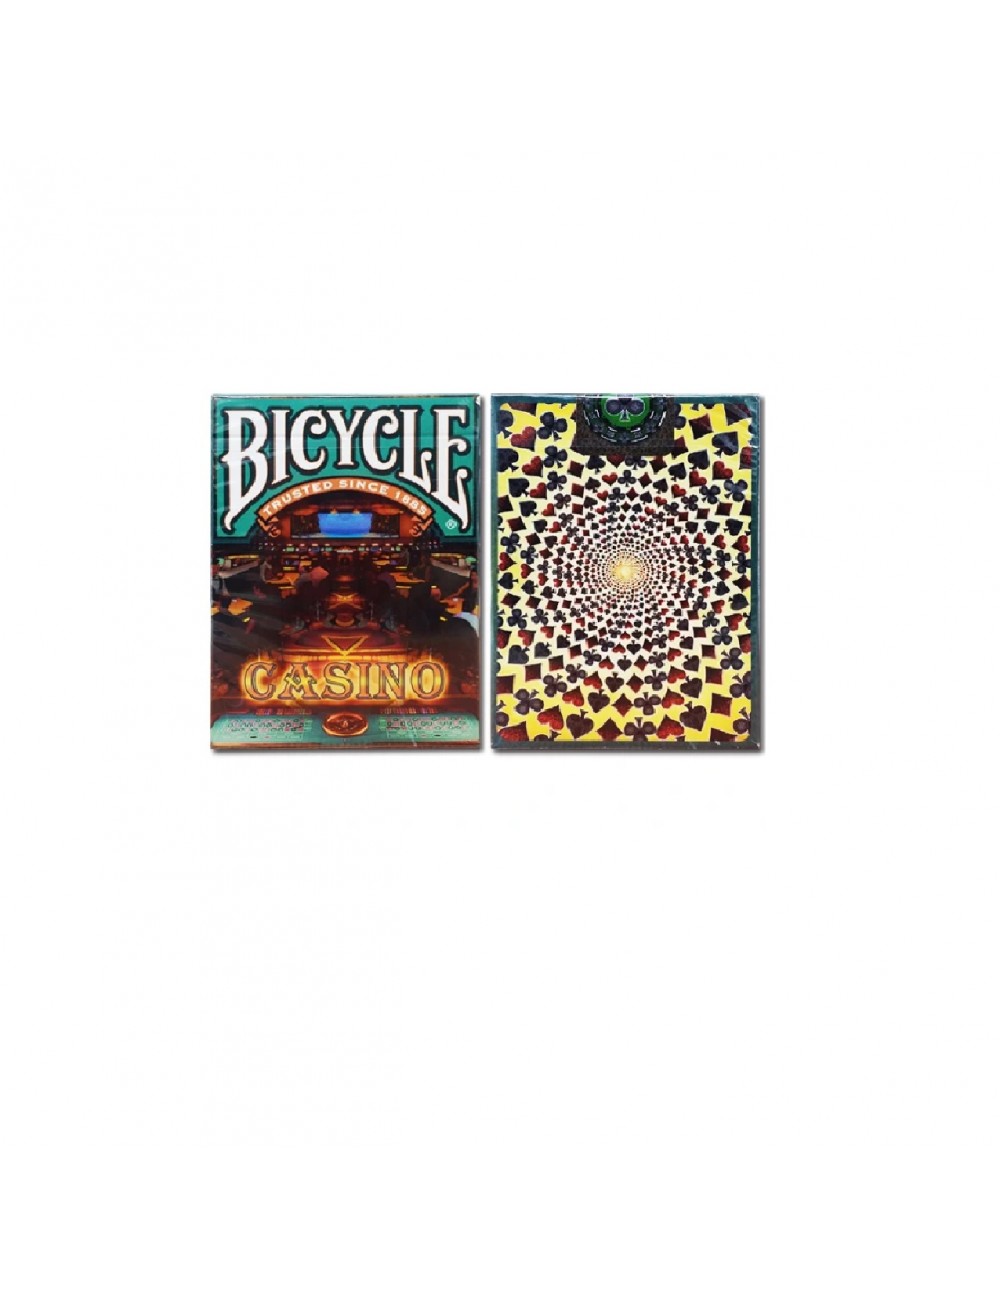 bicycle casino commerce ca